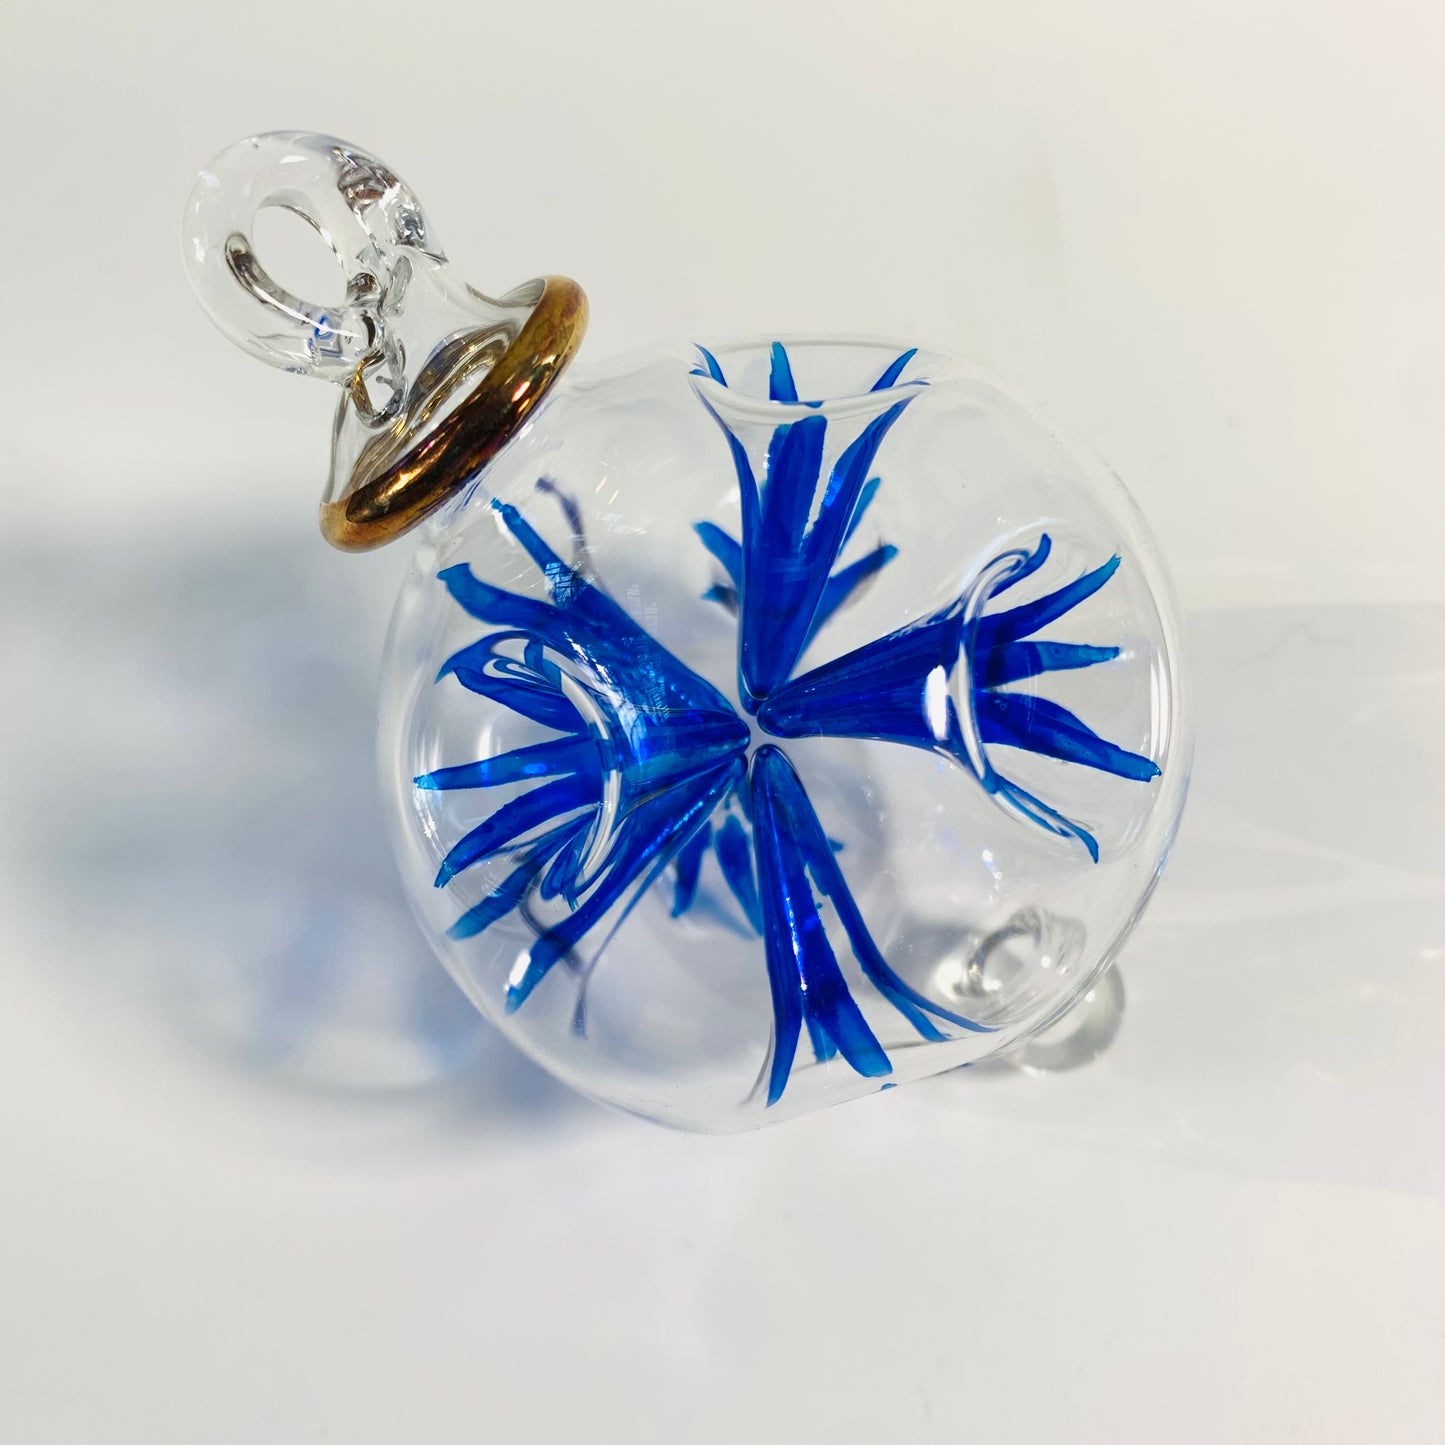 Blown Glass Ornament - Blossoms Blue